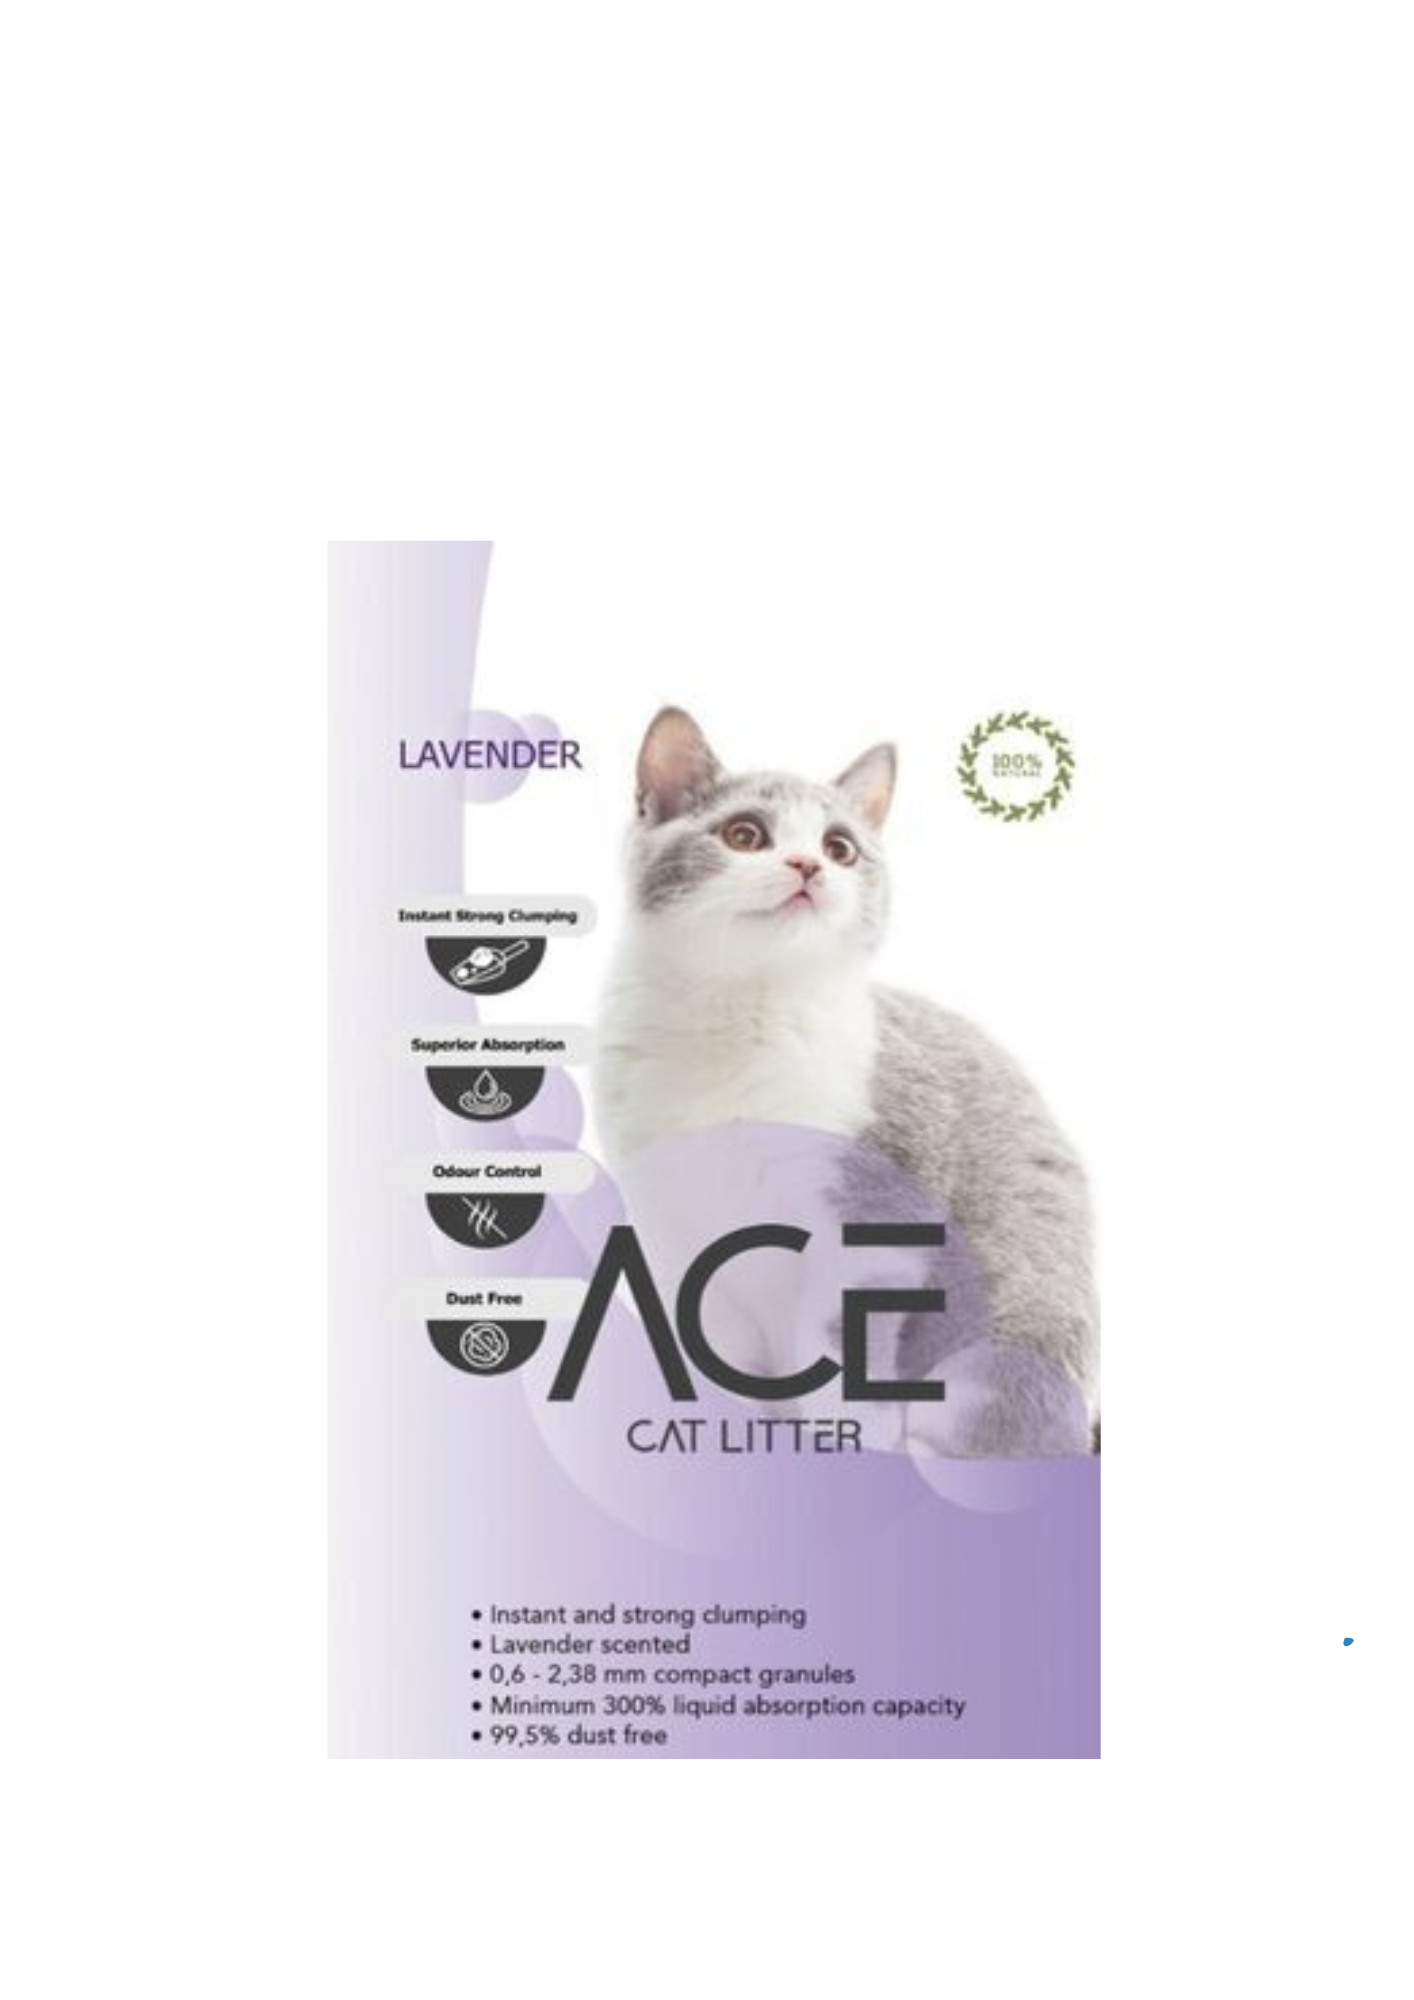 ACE Lavender CAT LITTER 5 L - cementējošās smiltis kaķu tualetei ar lavandu 5 L